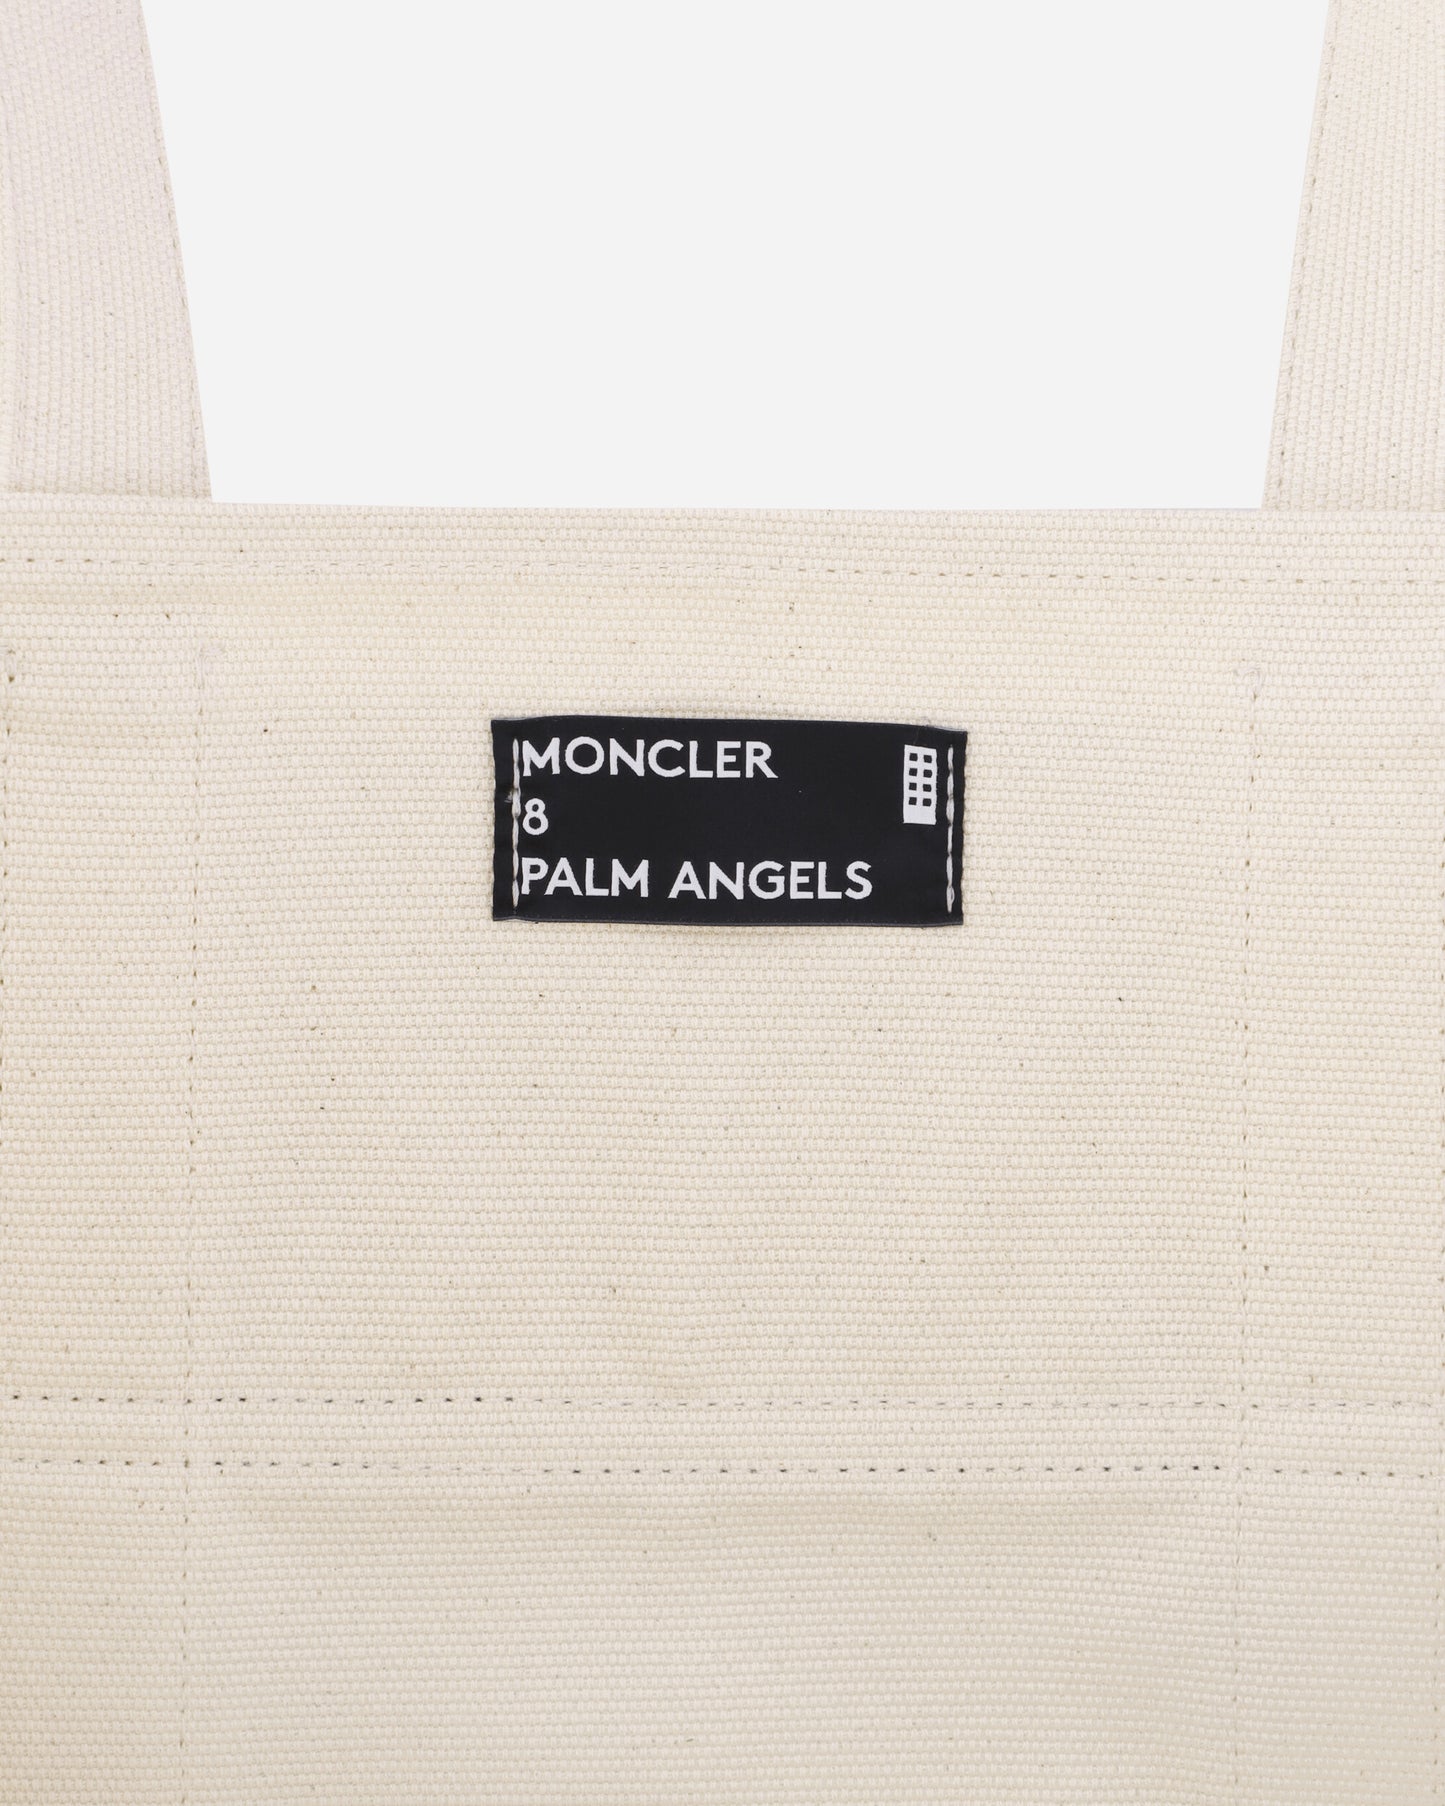 Moncler Genius Tote Bag X Palm Angels Tan/Yellow Bags and Backpacks Tote Bags 5D00001M3448 P12